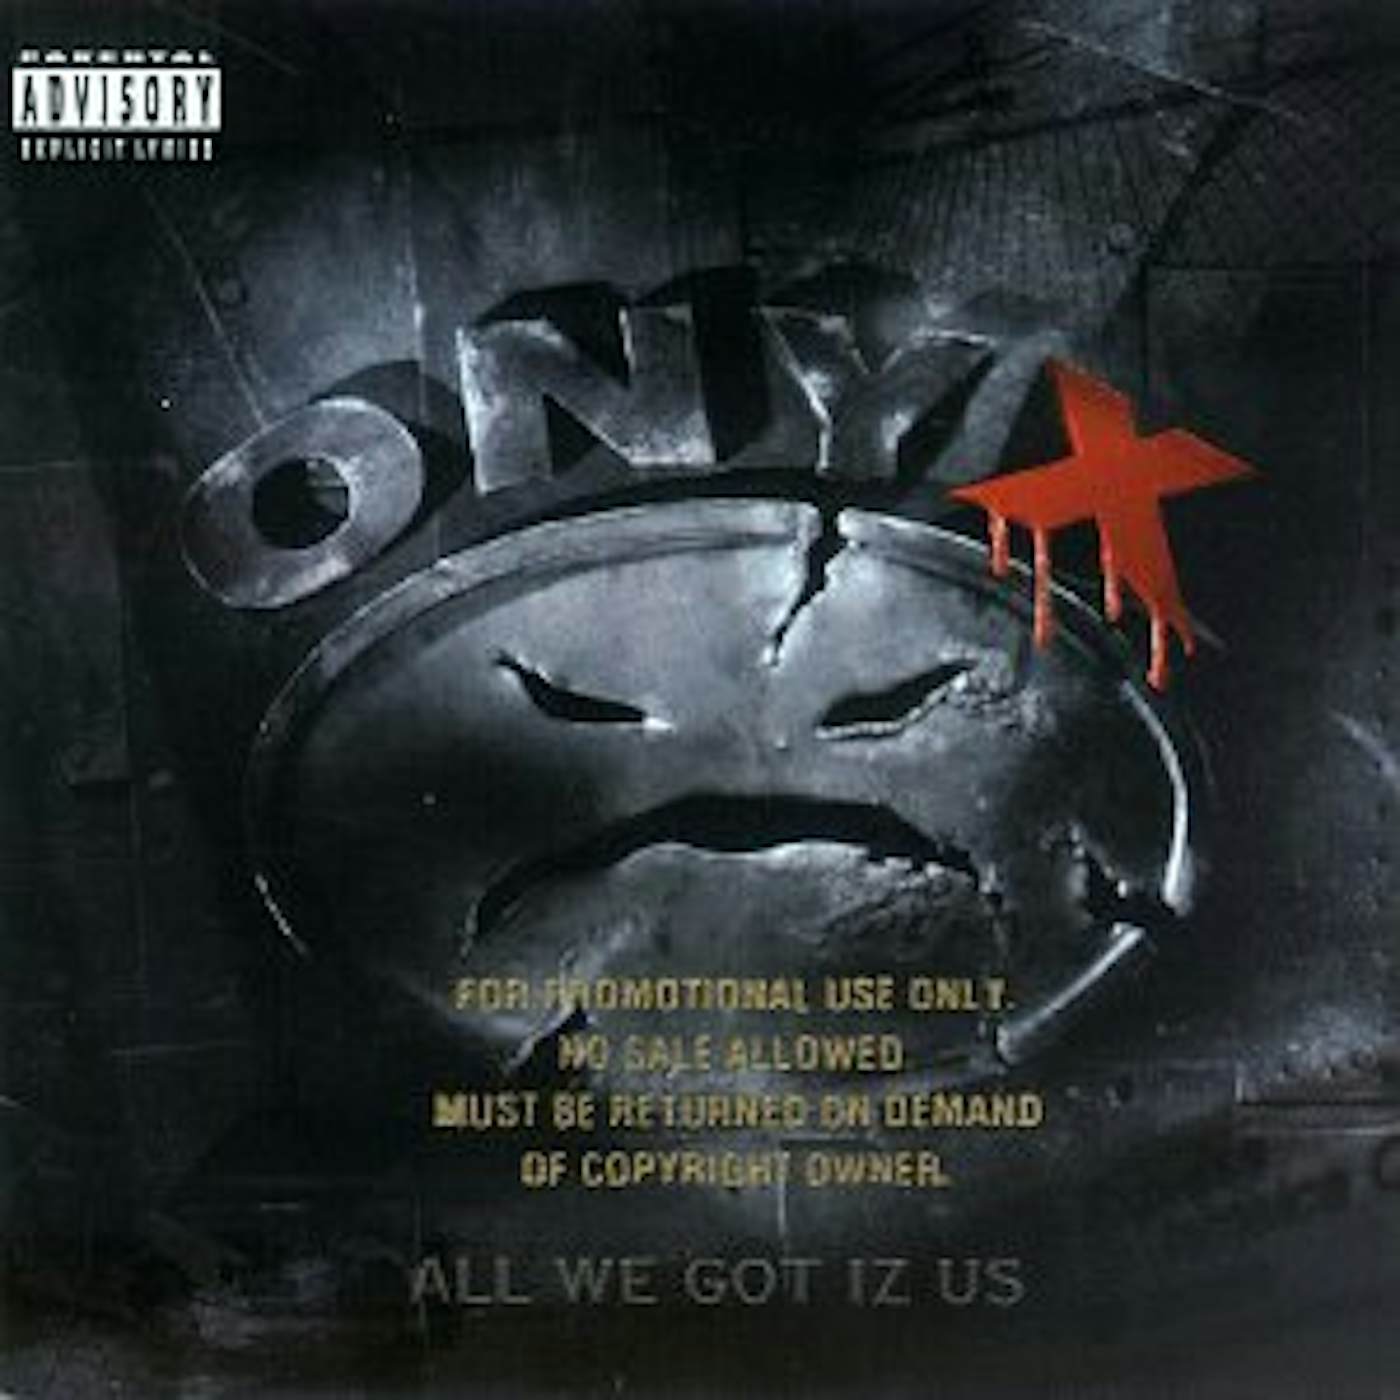 Onyx ALL WE GOT IZ US CD